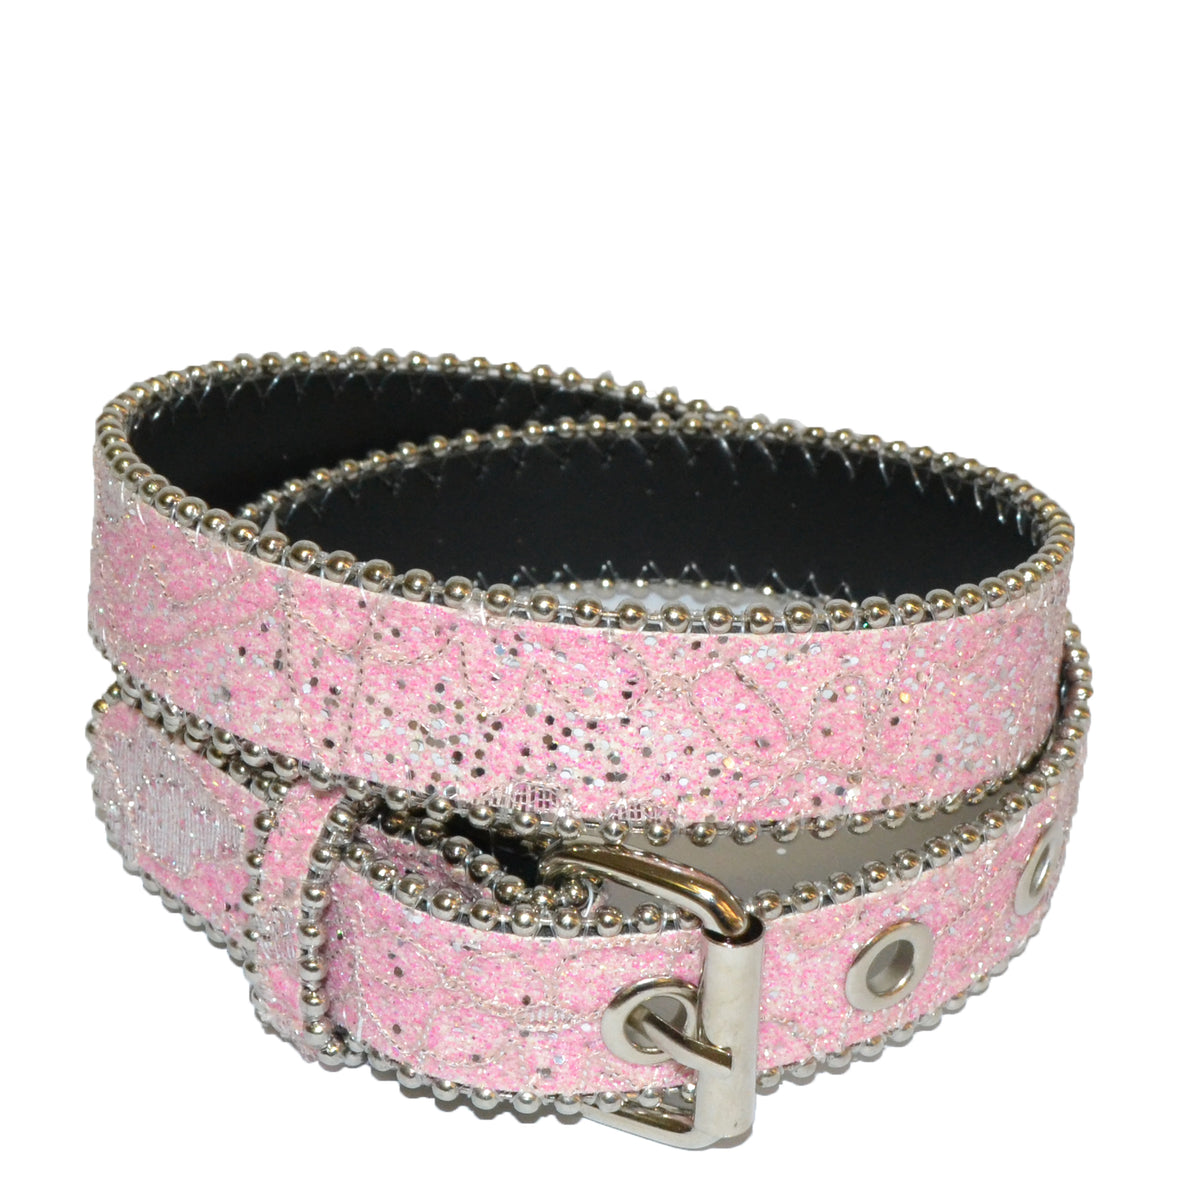 ADELAIDE - Girls Pink and White Glittery Belt Twin Pack  - Belt N Bags